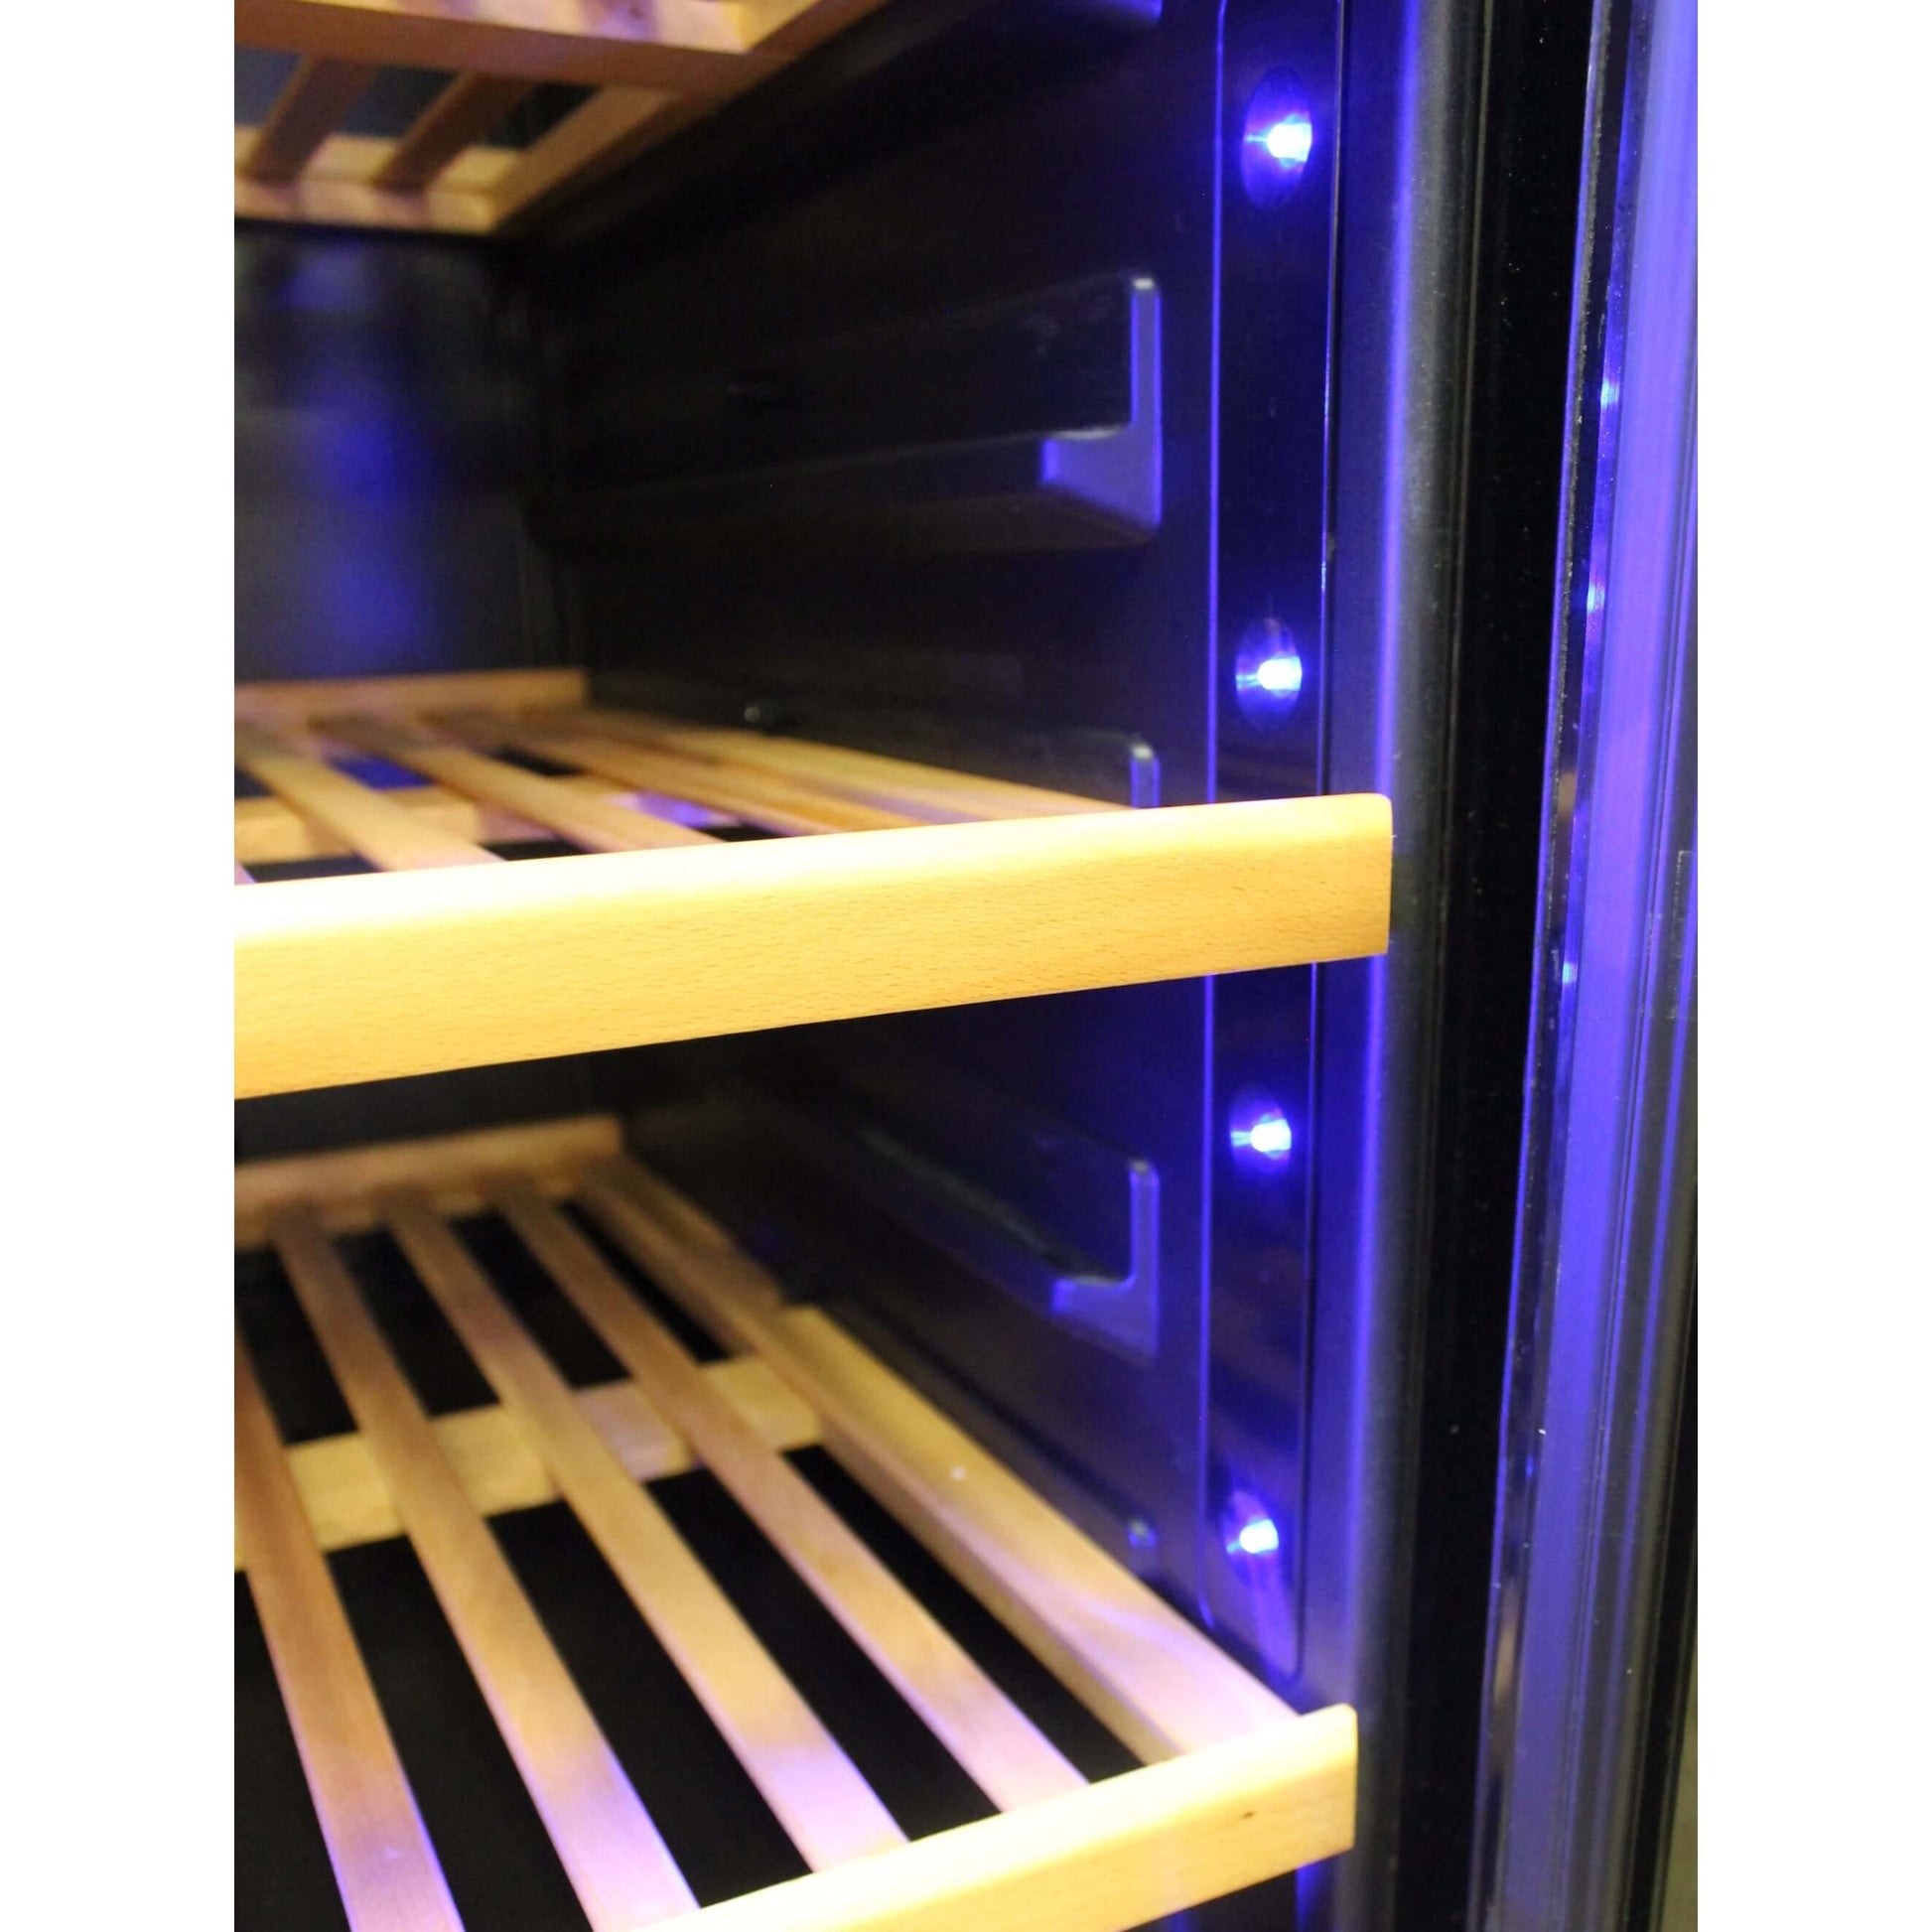 Vinotemp Garage 168 Dual-Zone Wine Cooler